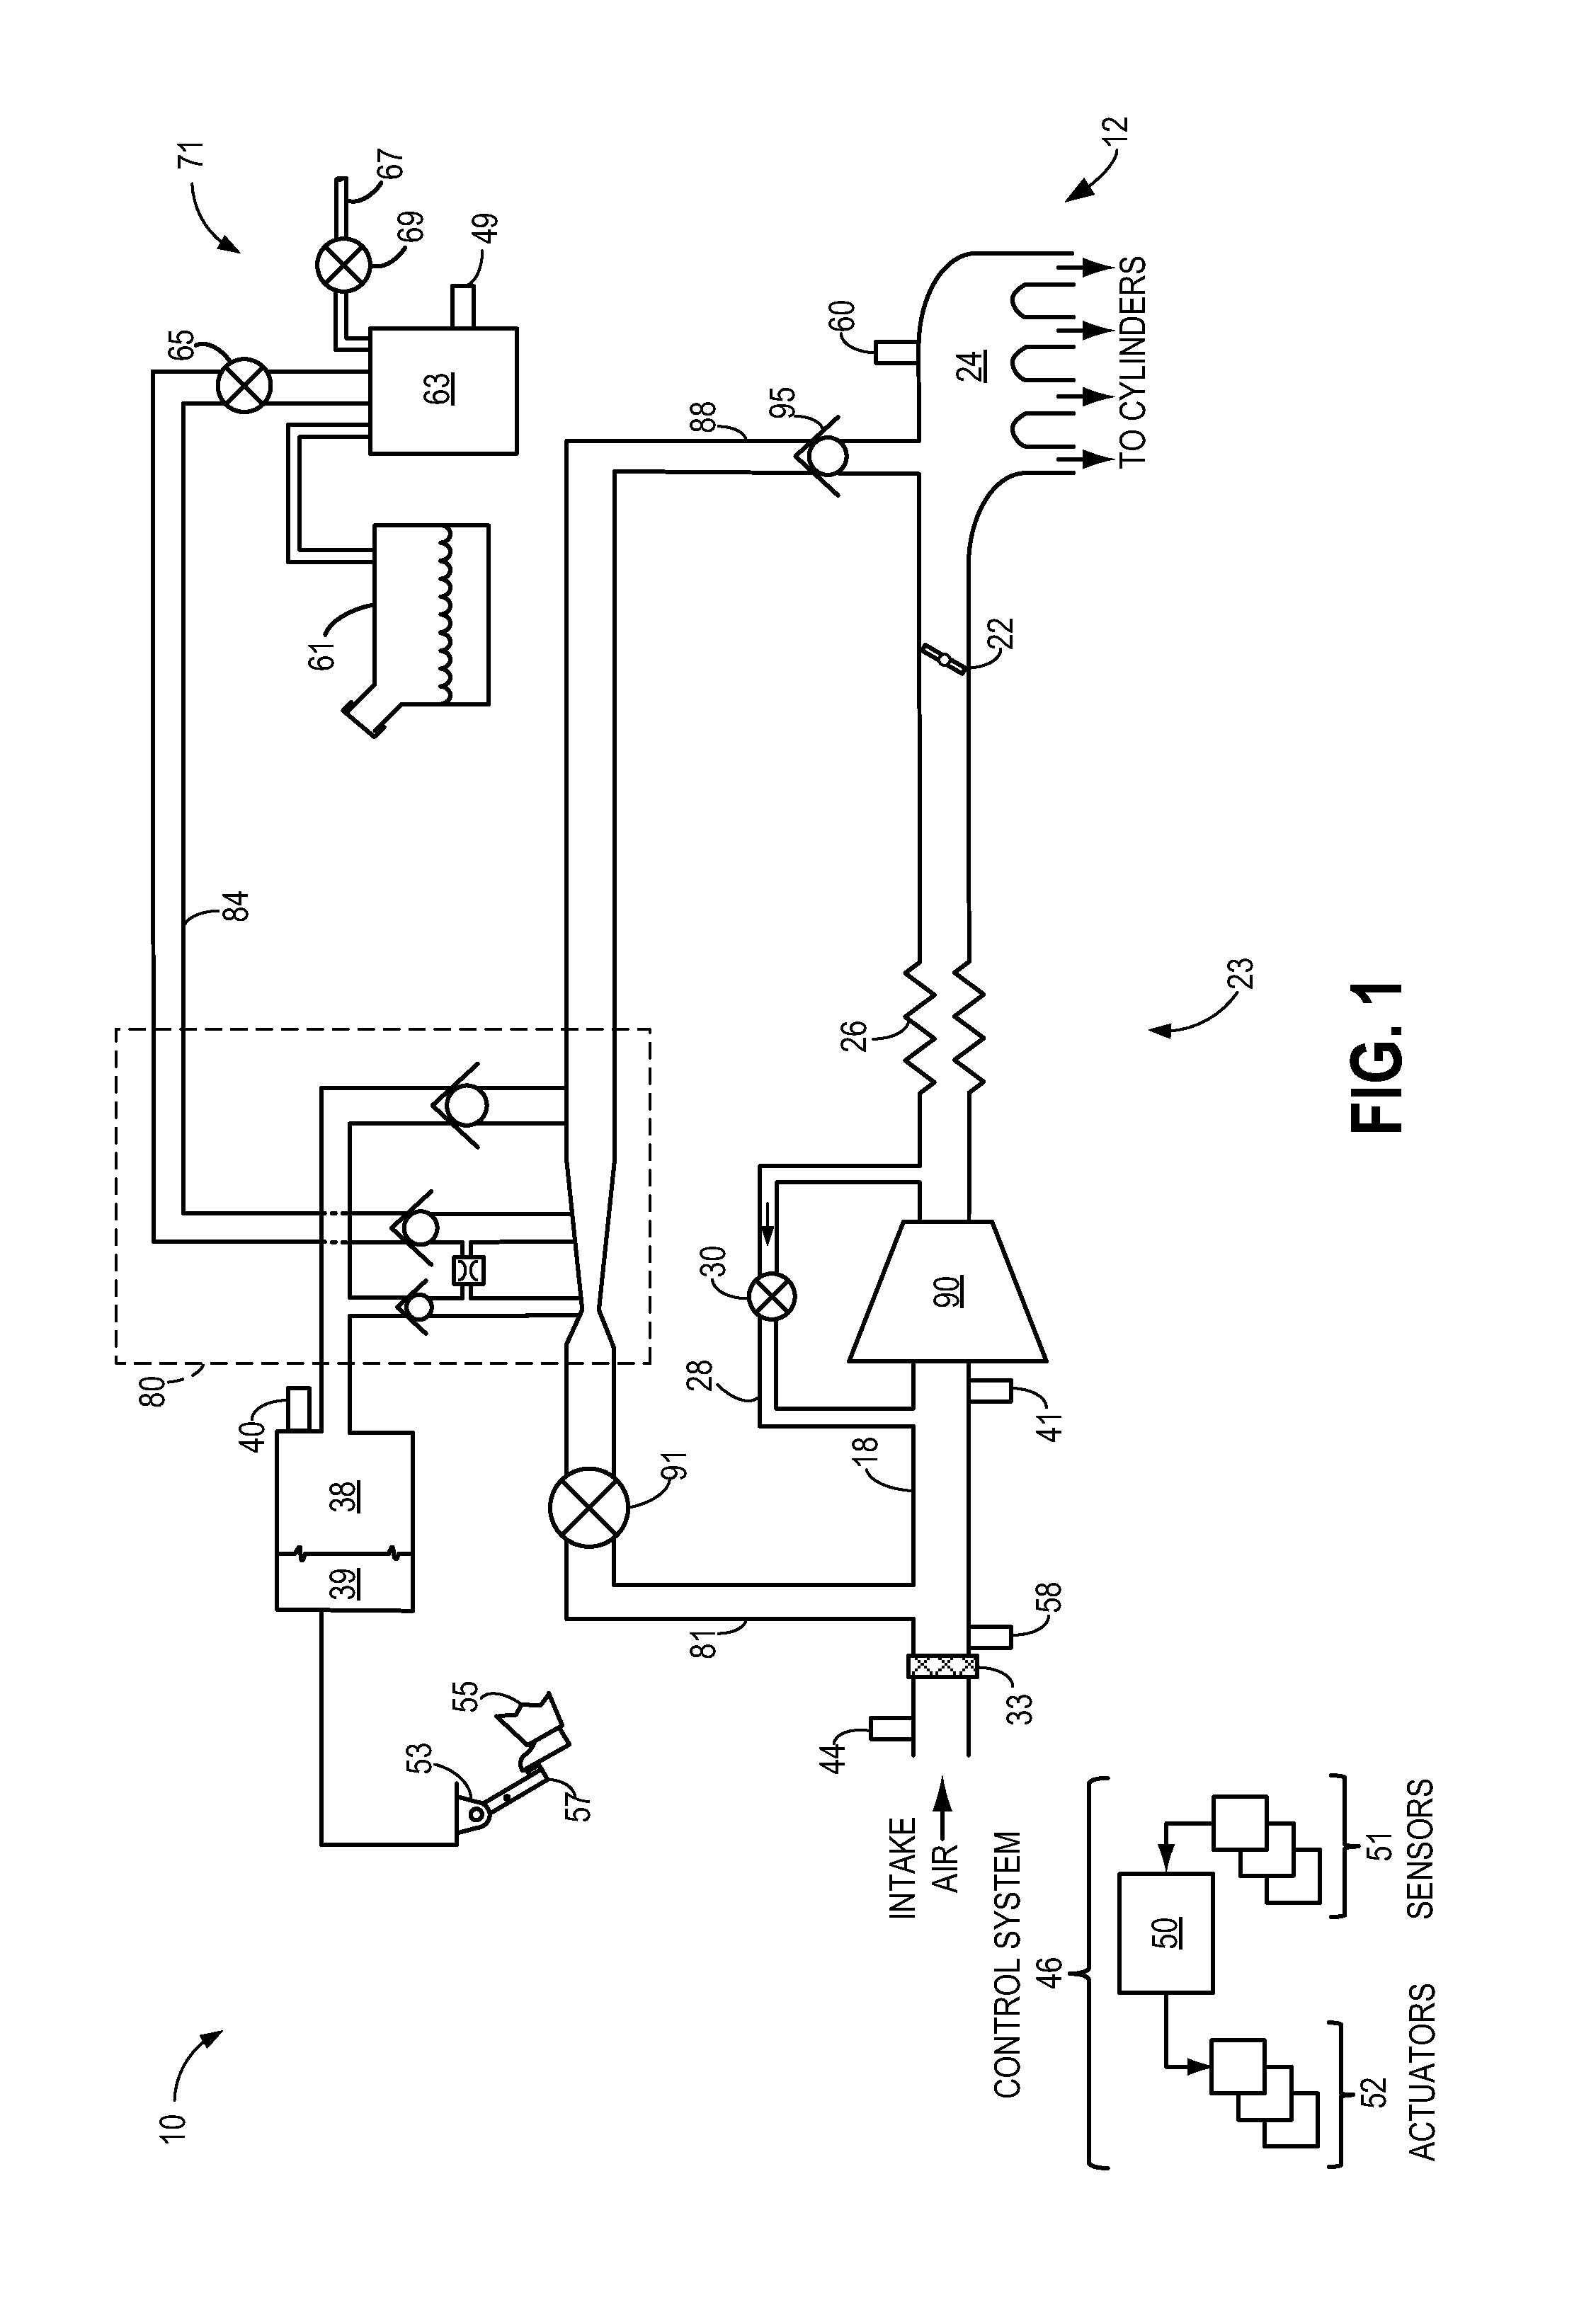 Multiple tap aspirator with leak passage